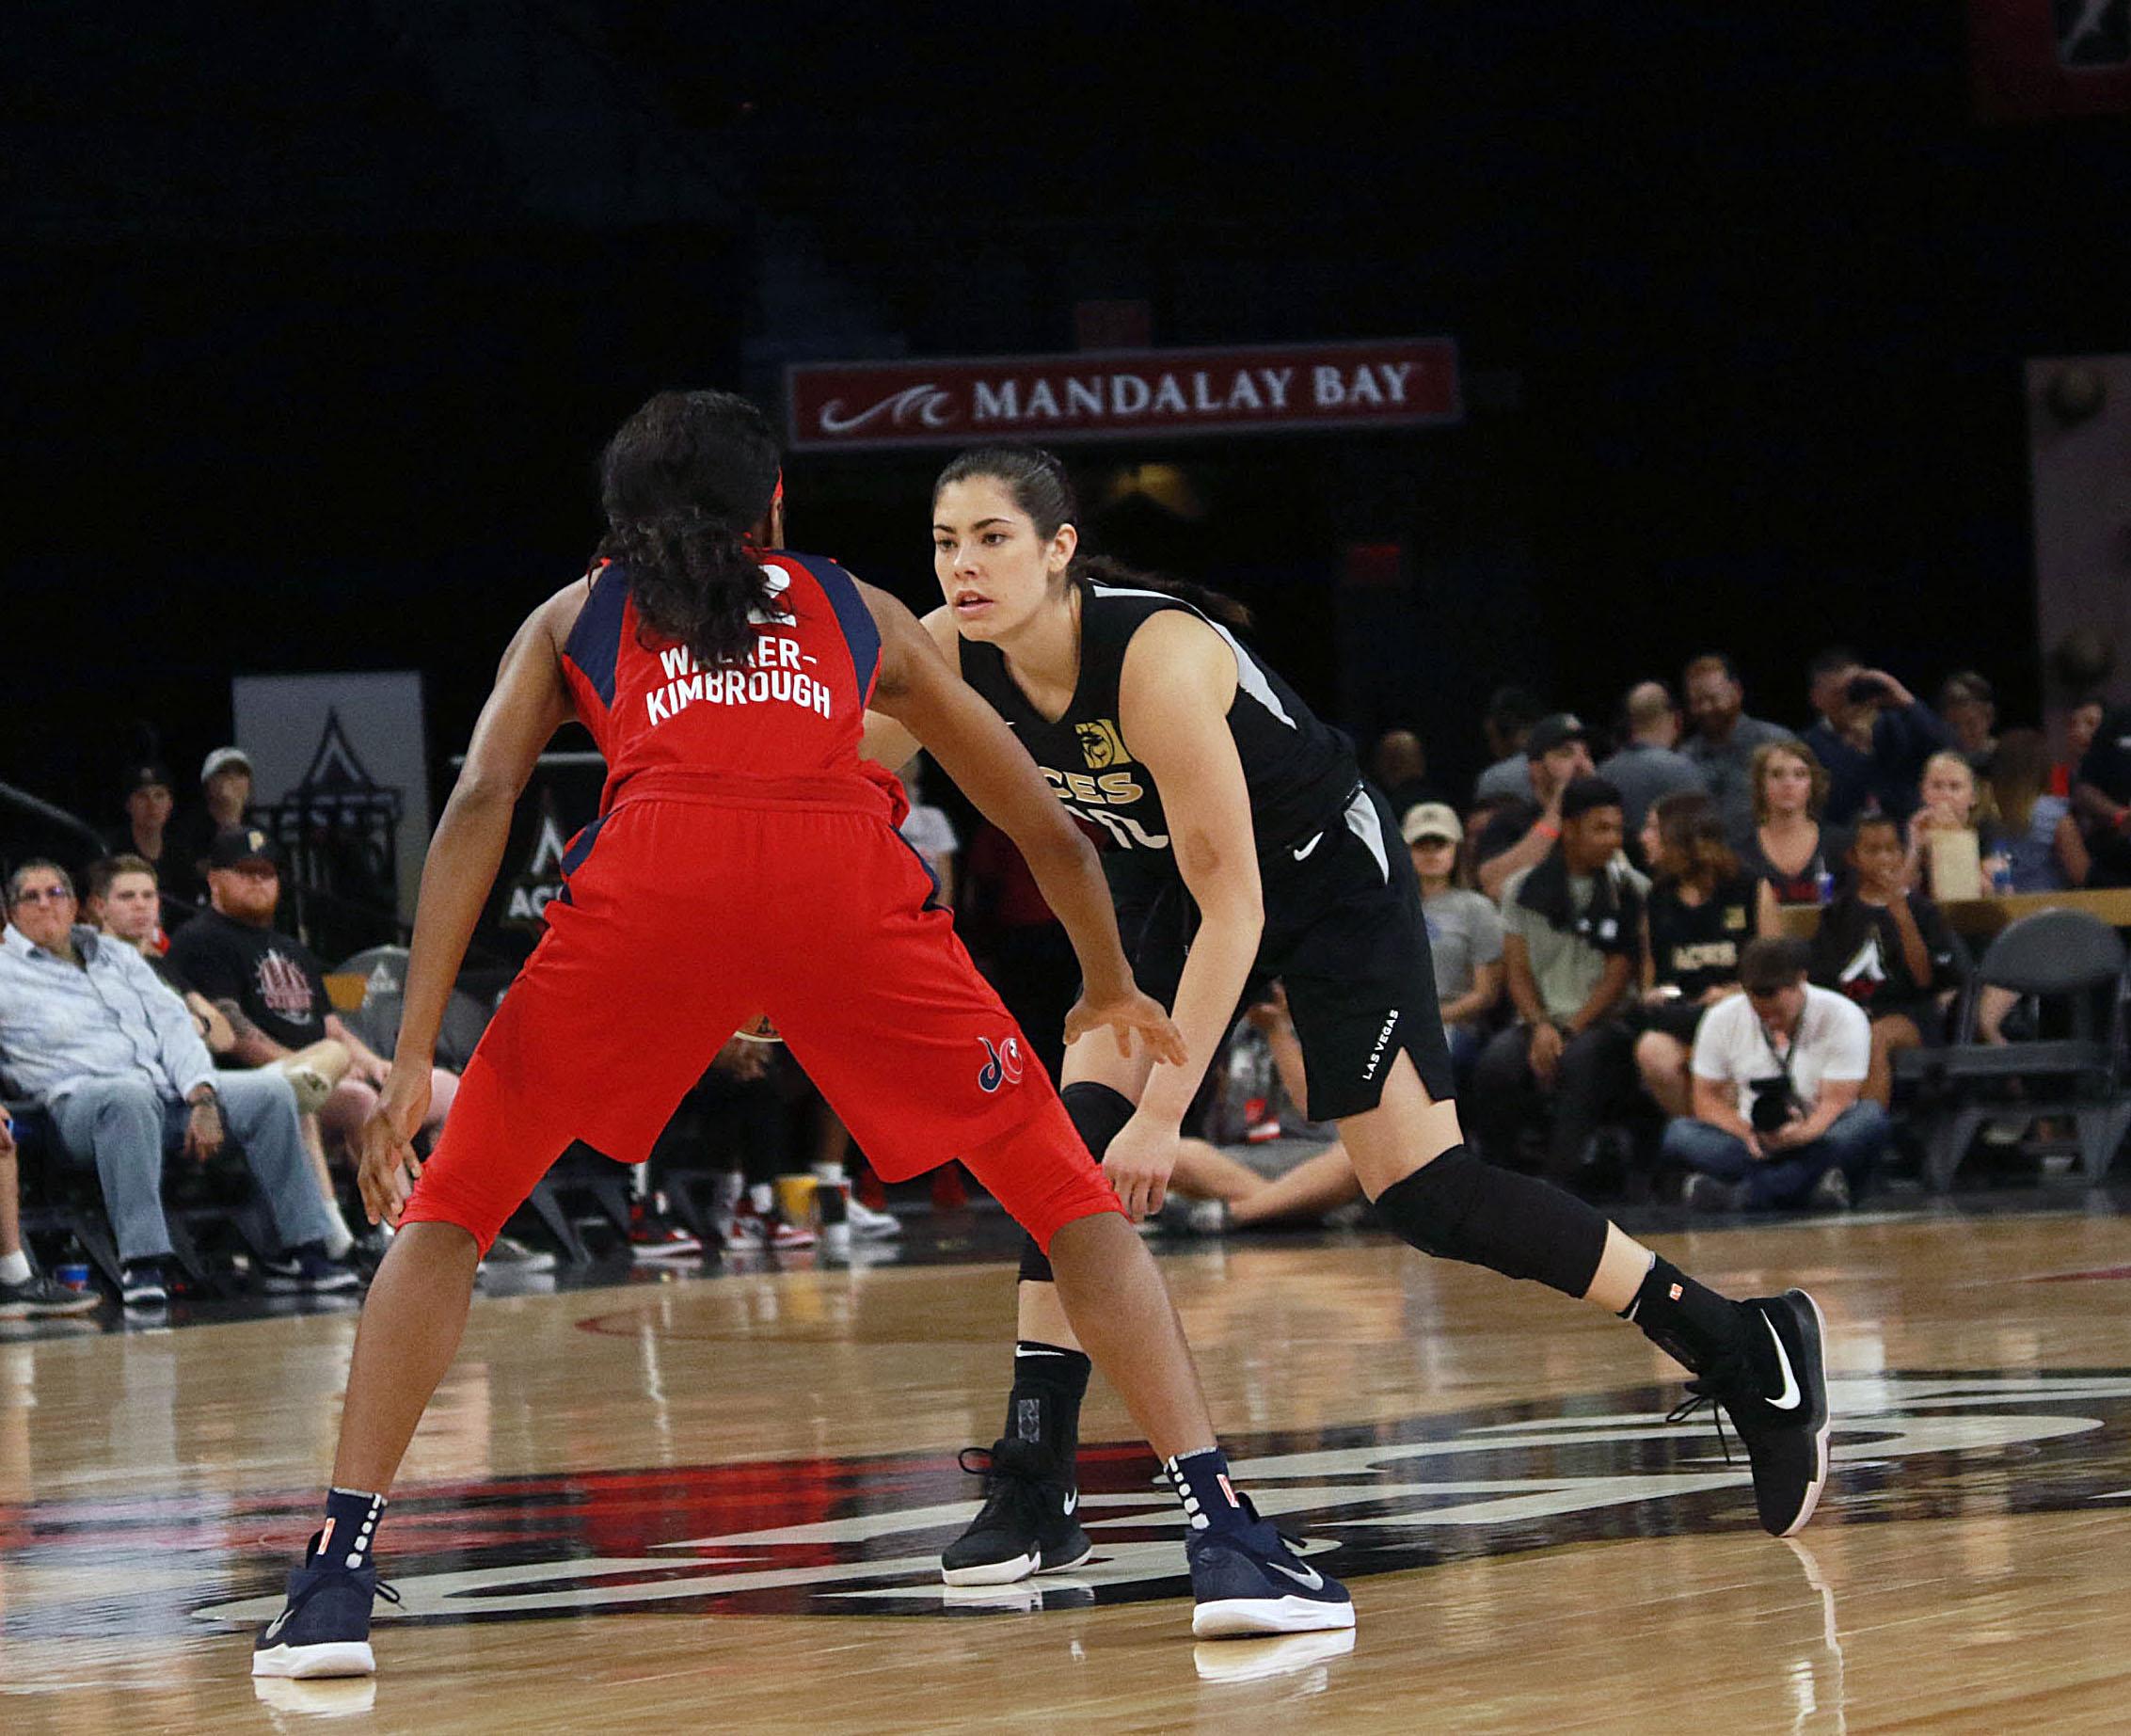 Two women play basketball.